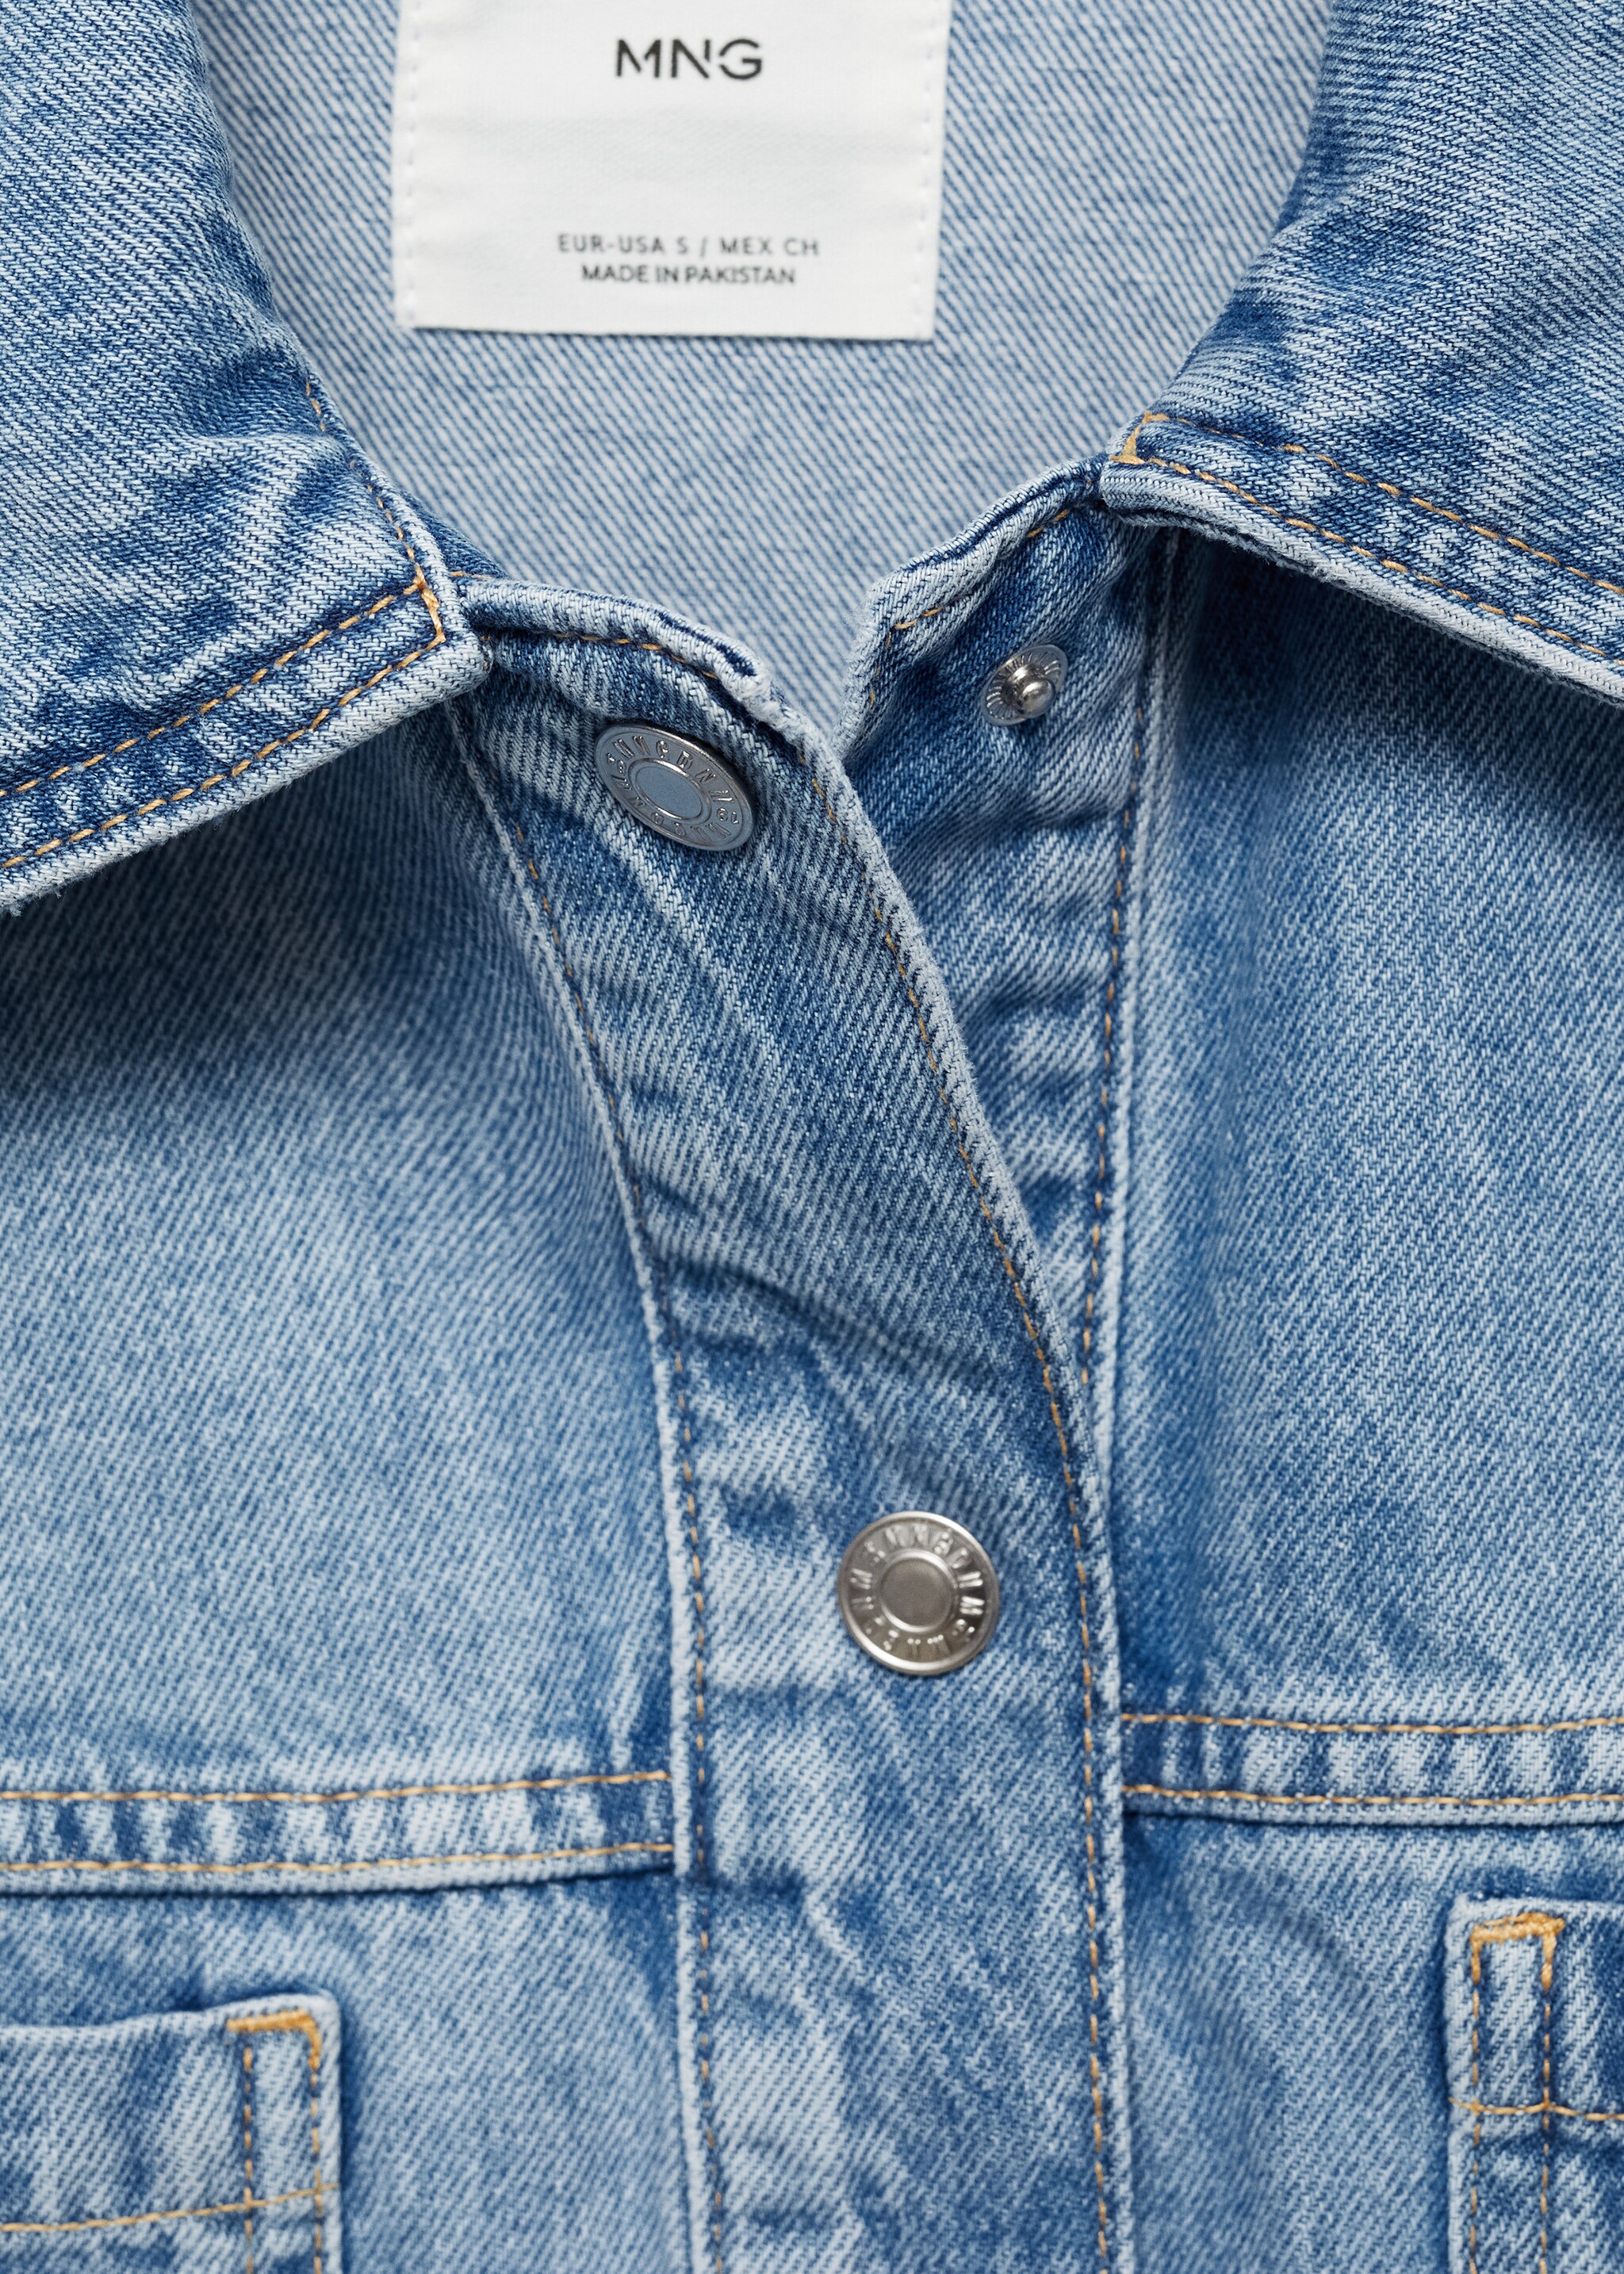 Pocketed denim jacket - Details of the article 8